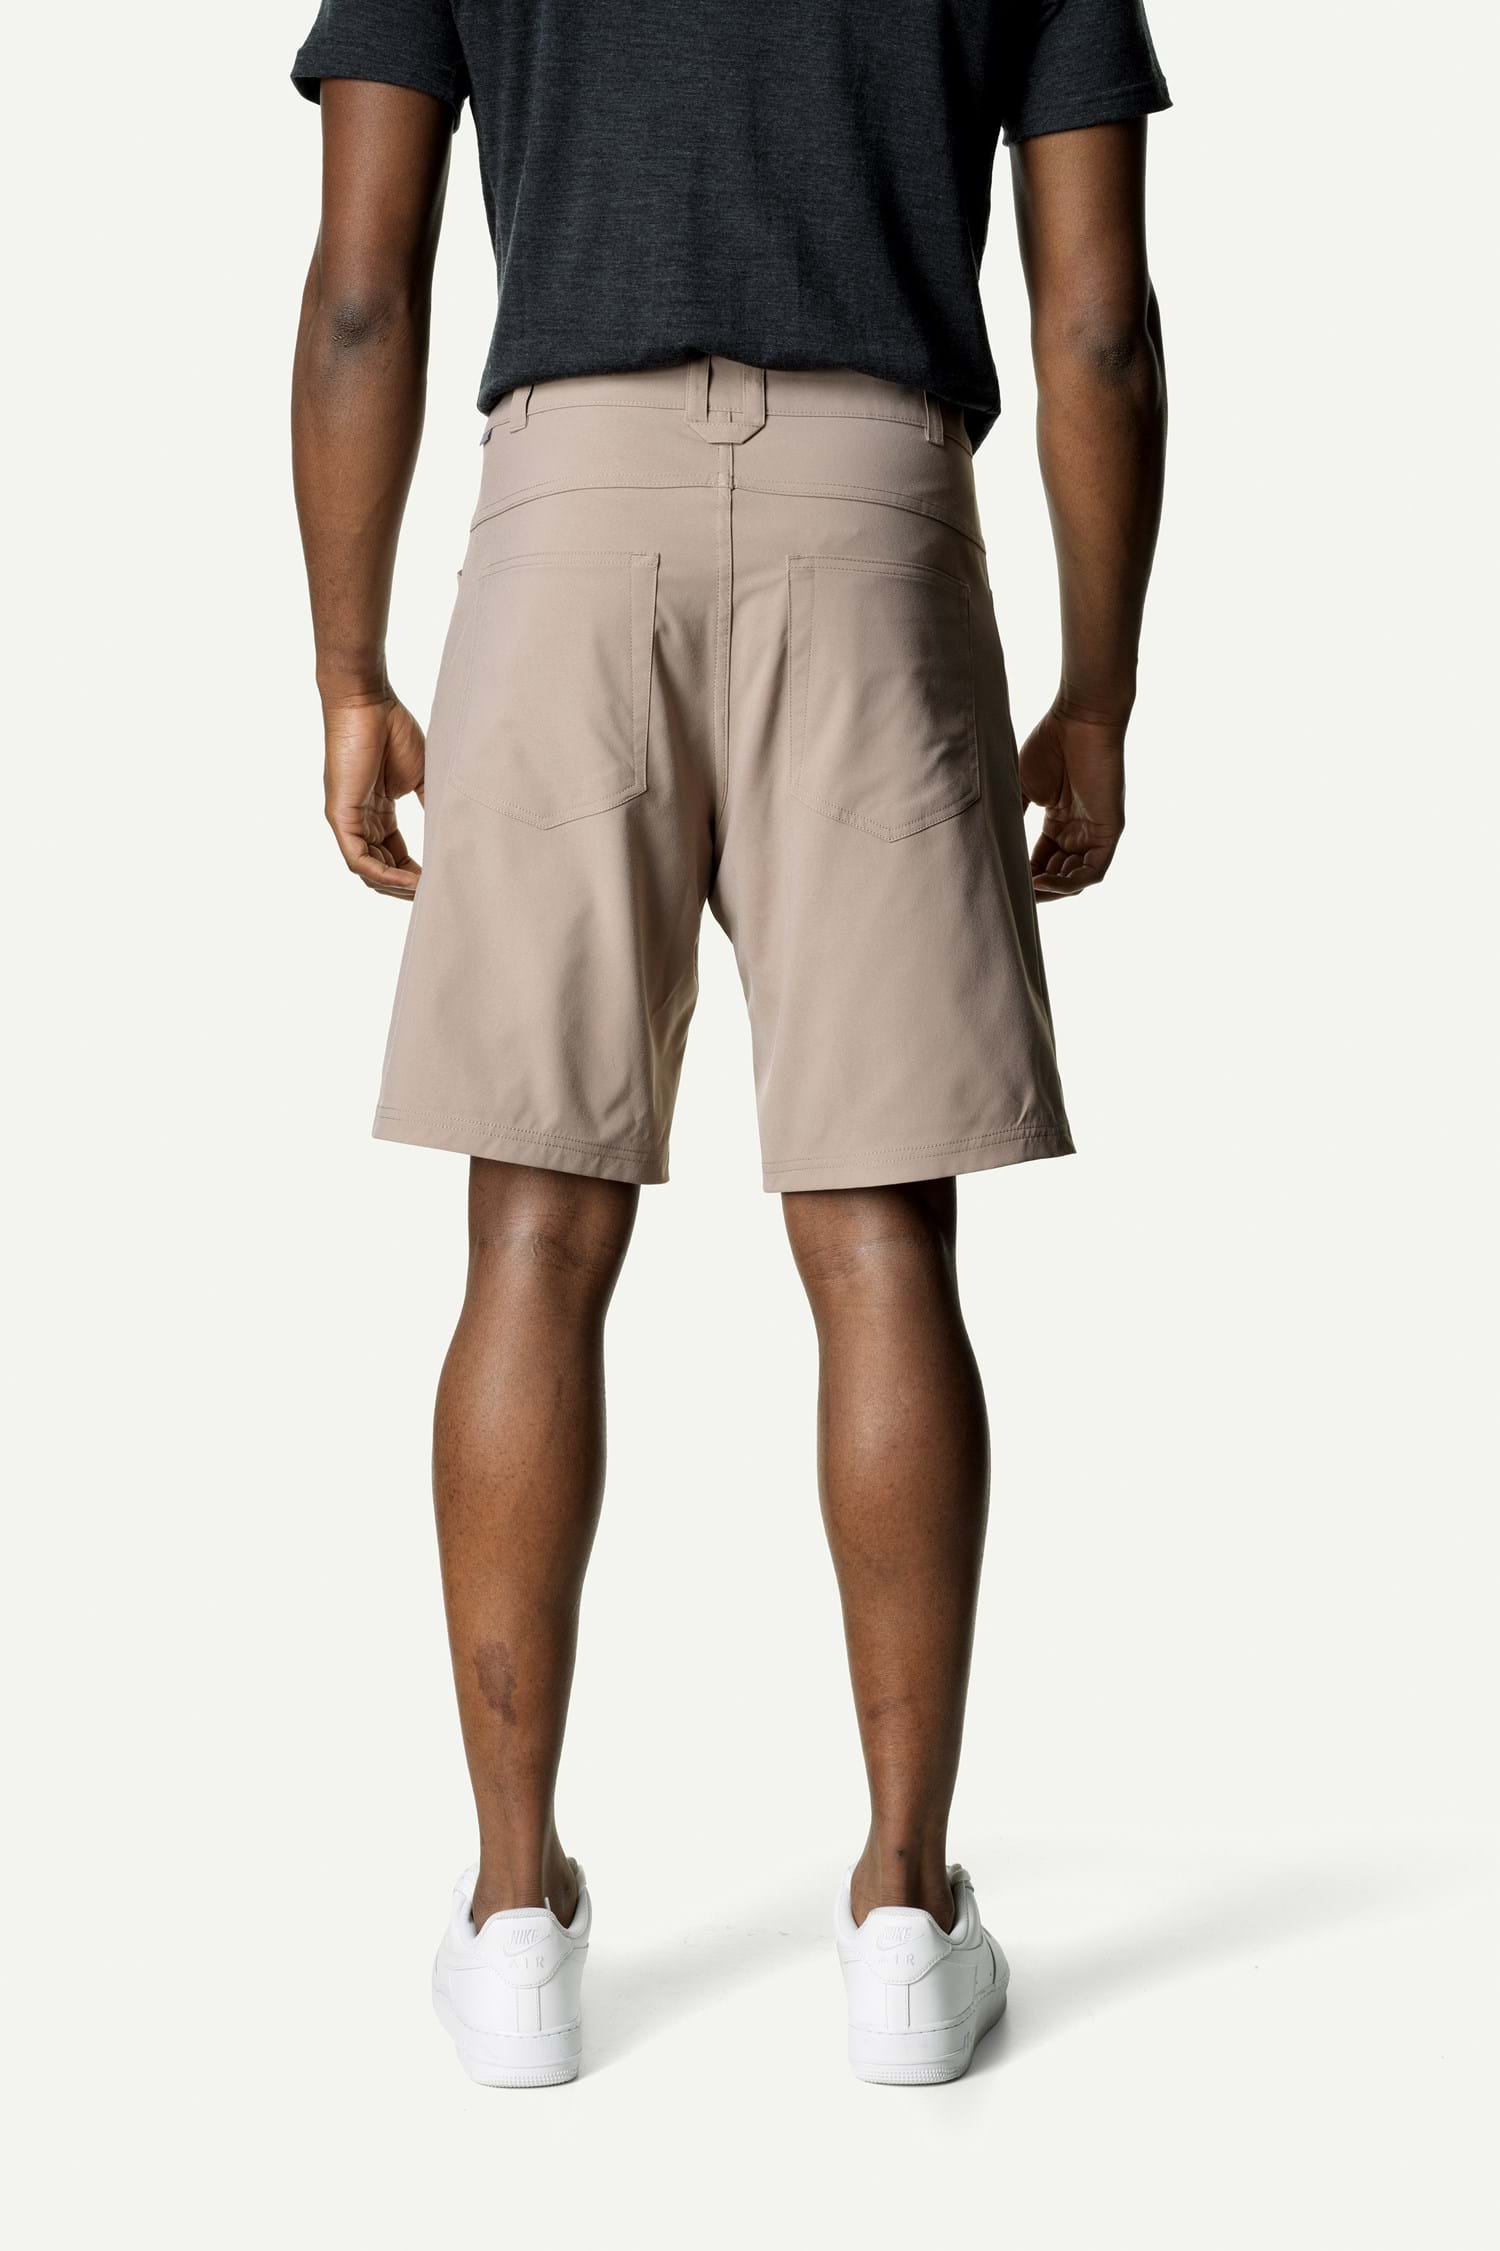 Prada Other Materials Shorts in Black for Men Mens Clothing Shorts Casual shorts Save 32% 